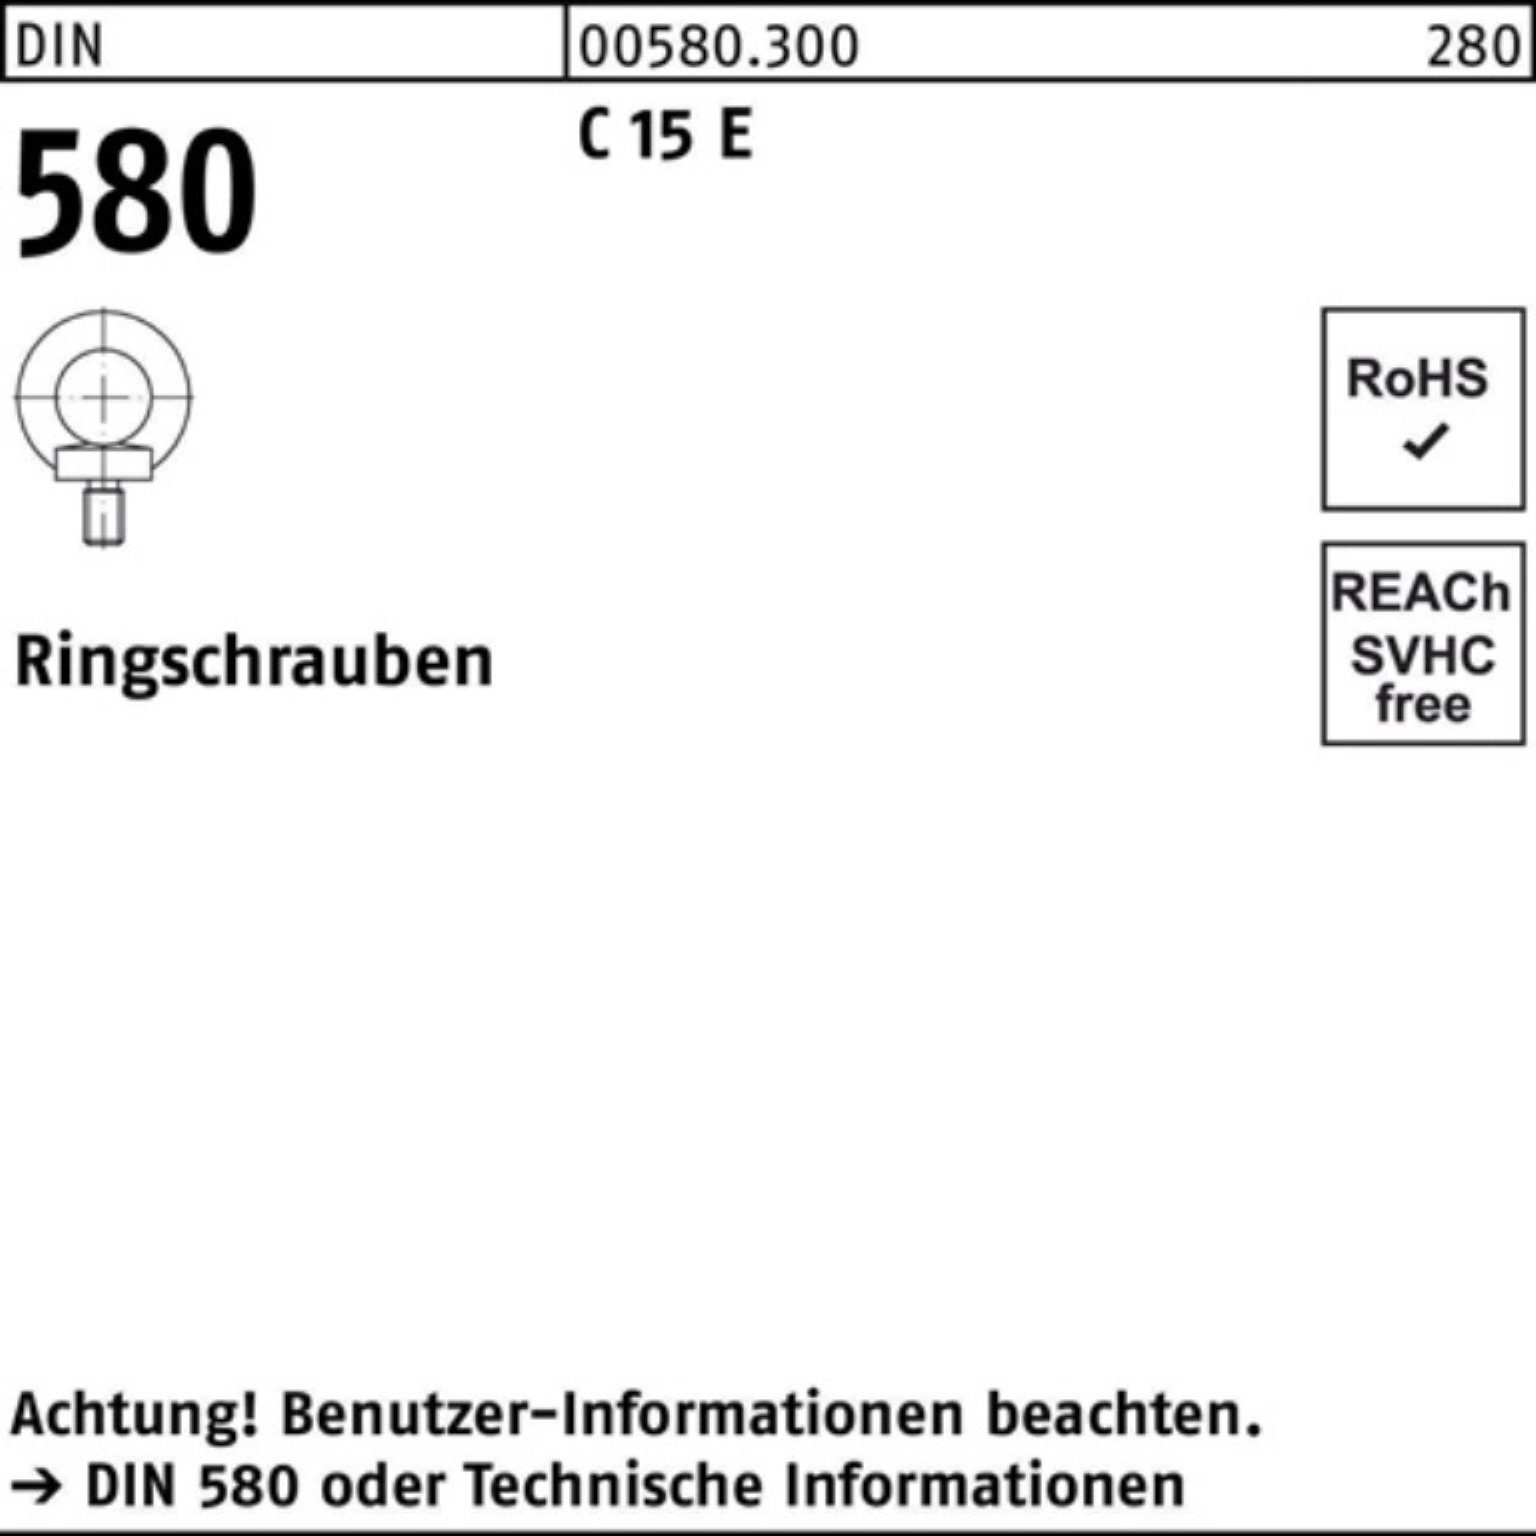 Reyher Schraube 100er Pack Ringschraube DIN 580 M10 C 15 E 25 Stück DIN 580 C 15 E Ri